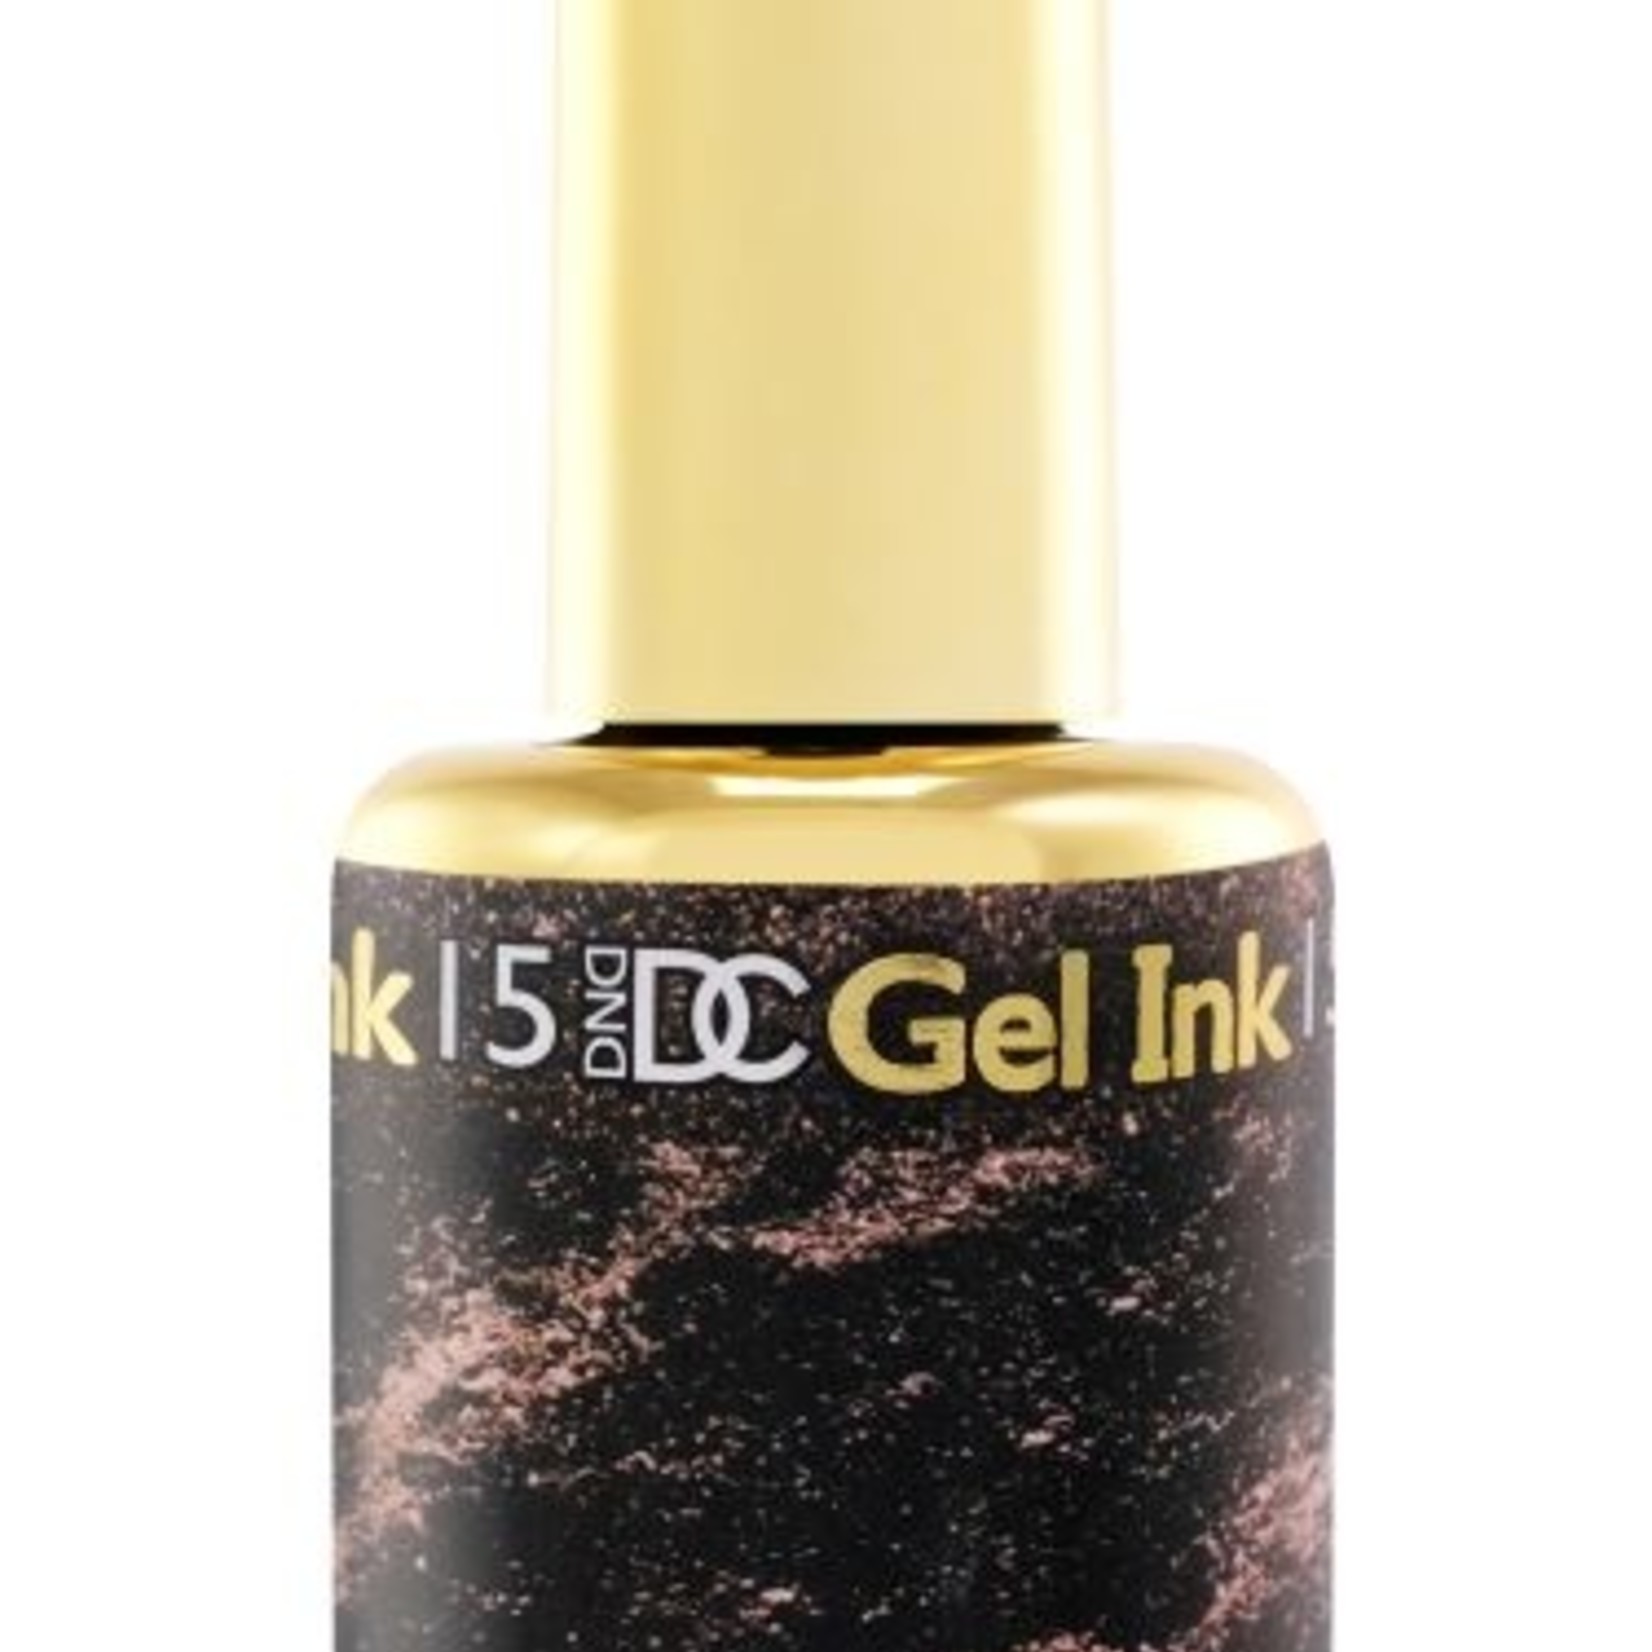 DC - Marble Gel Ink - 15 - Copper - .6 fl oz